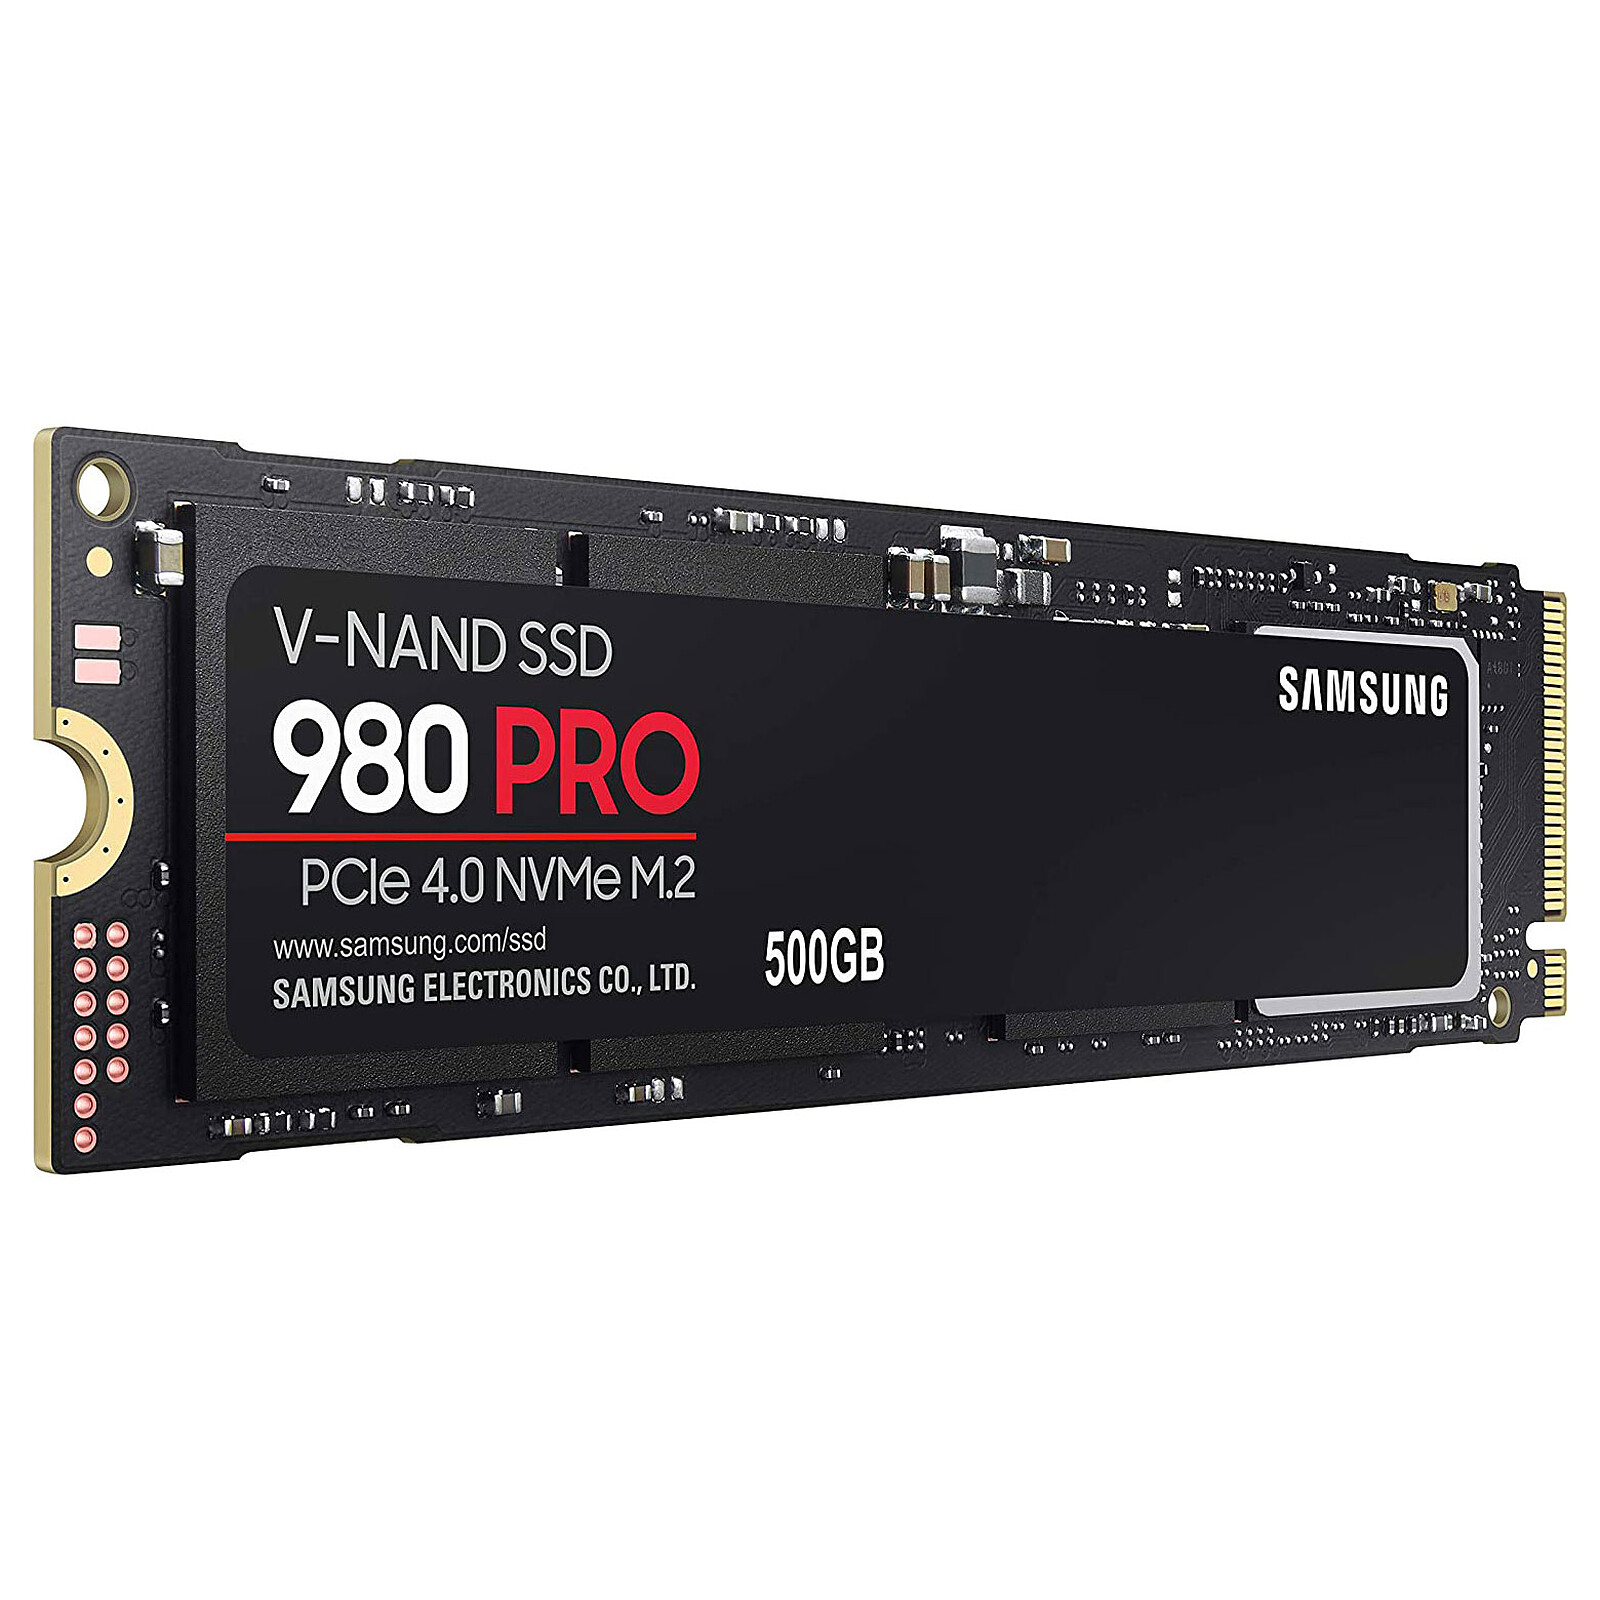 Samsung SSD 980 PRO M.2 PCIe NVMe 500GB - SSD - LDLC 3-year warranty